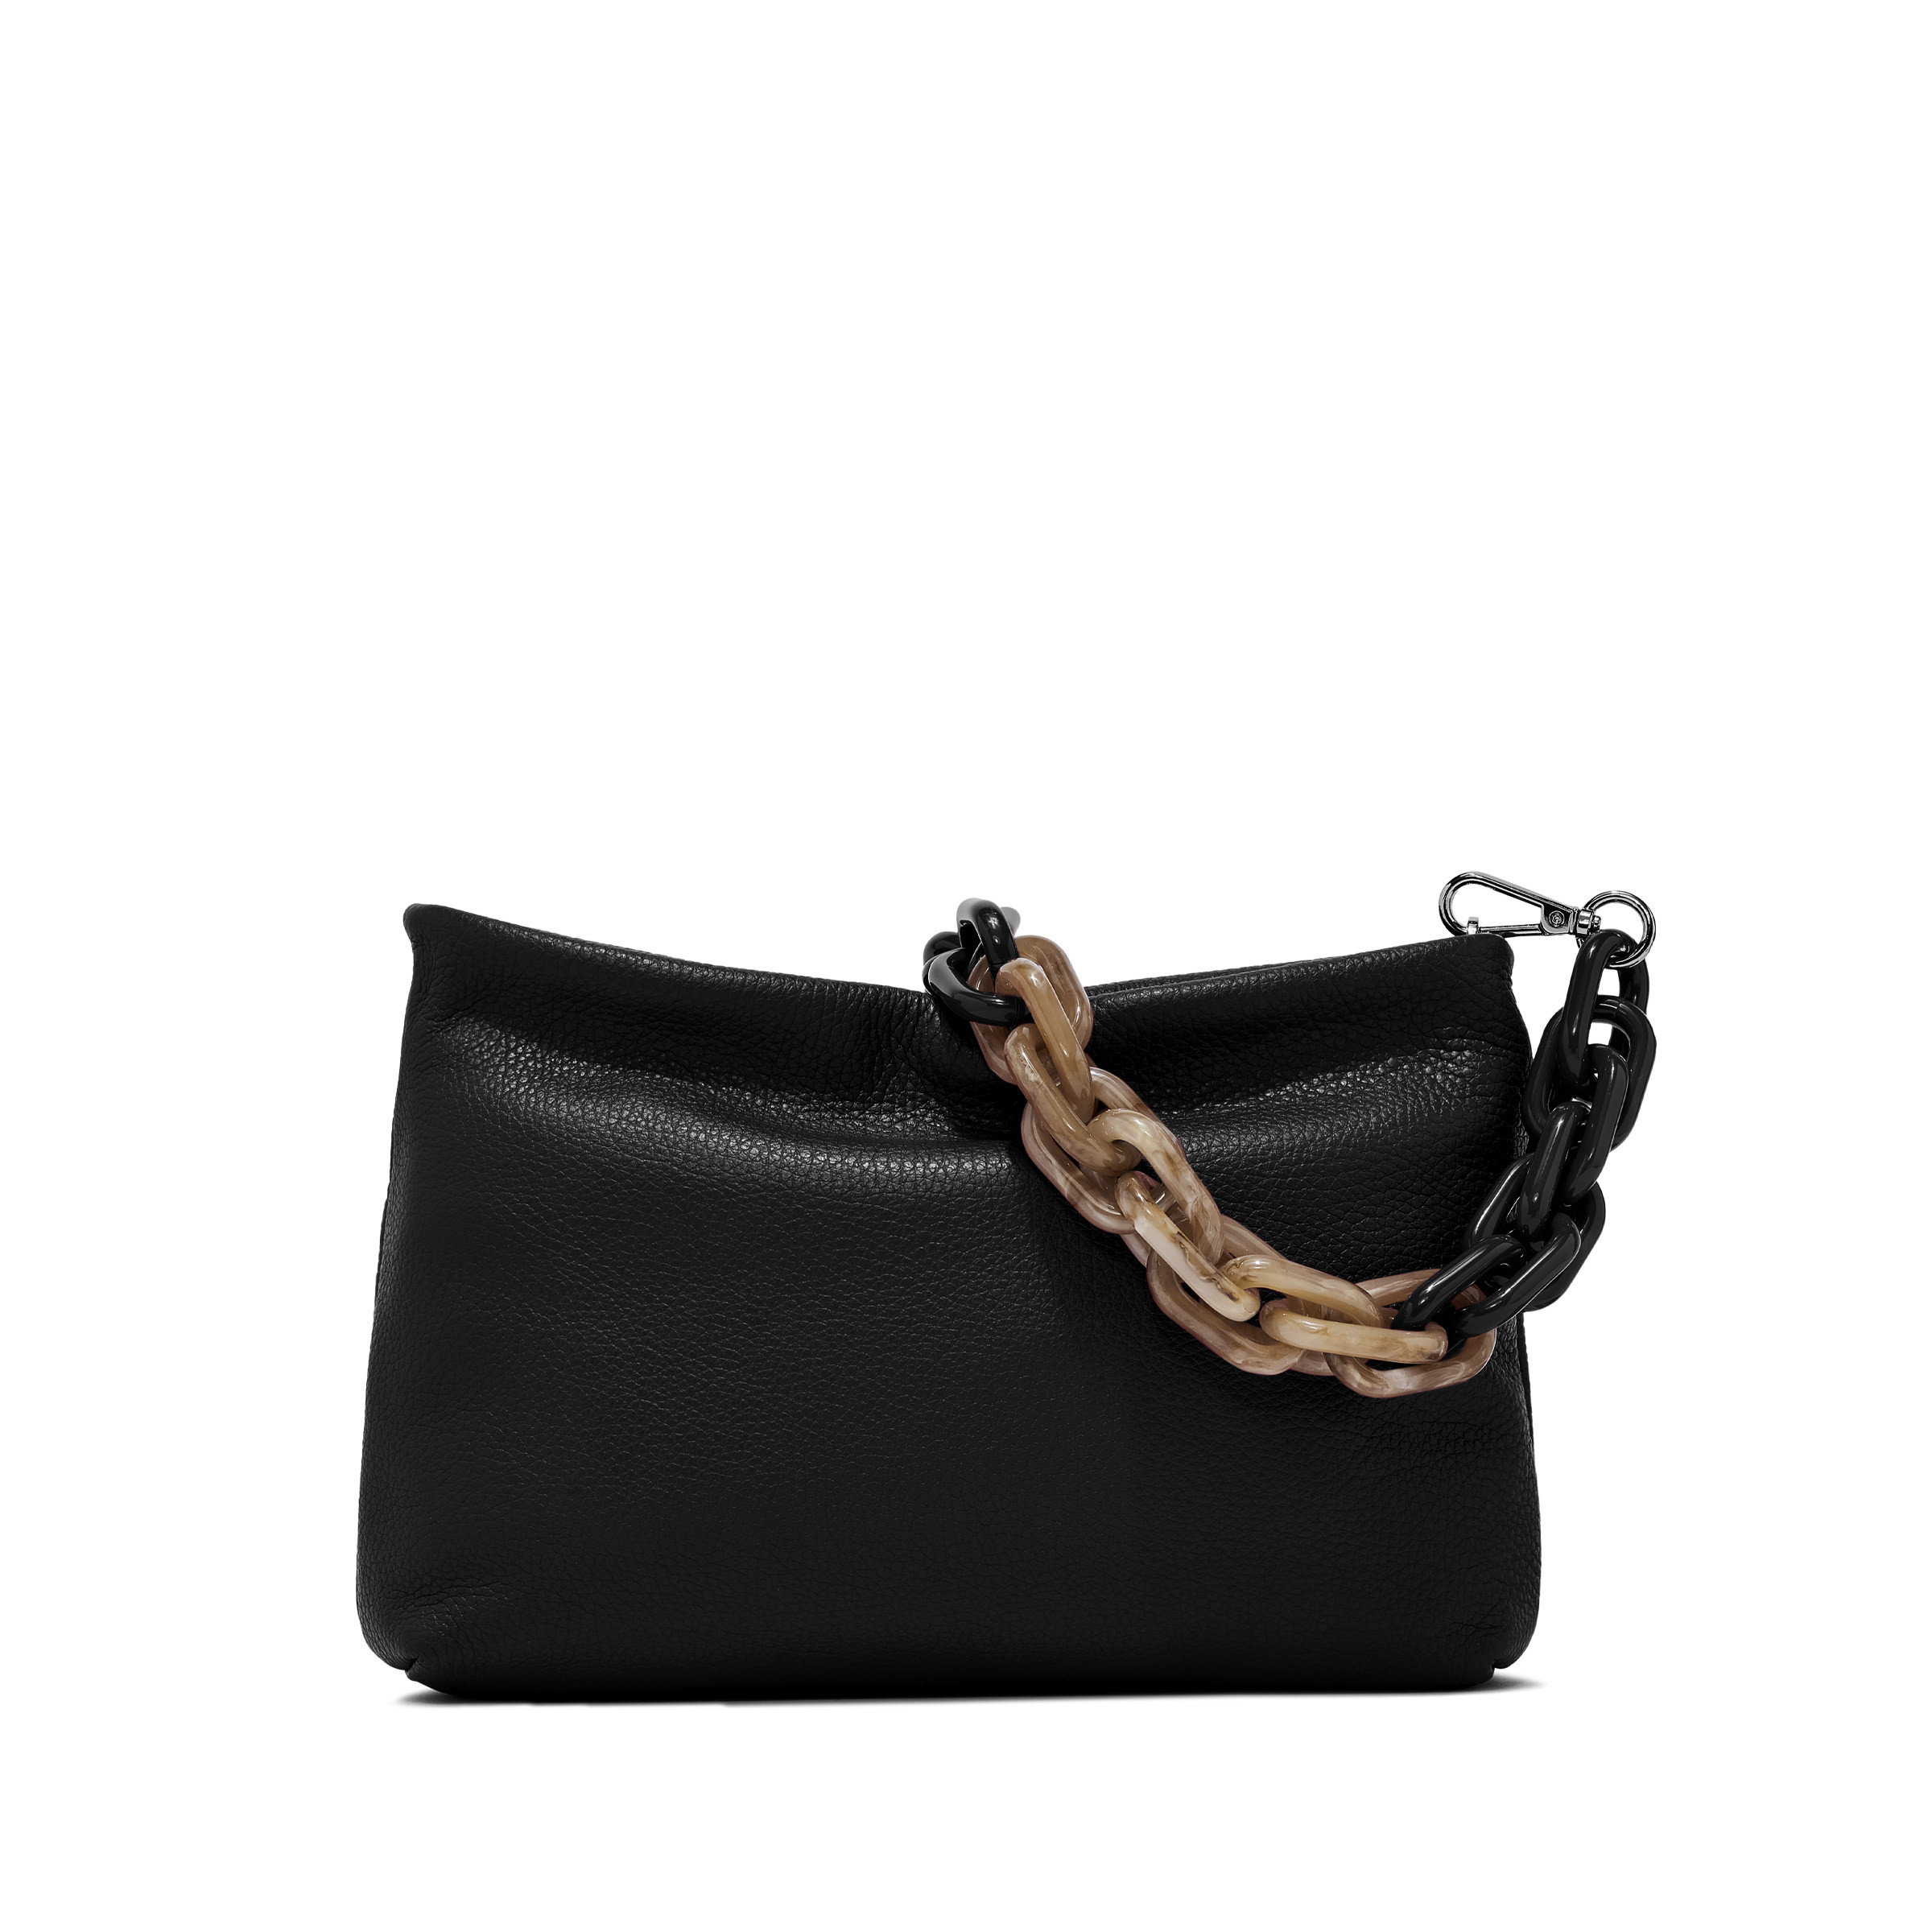 Gianni Chiarini - Brenda leather bag, Black, large image number 0